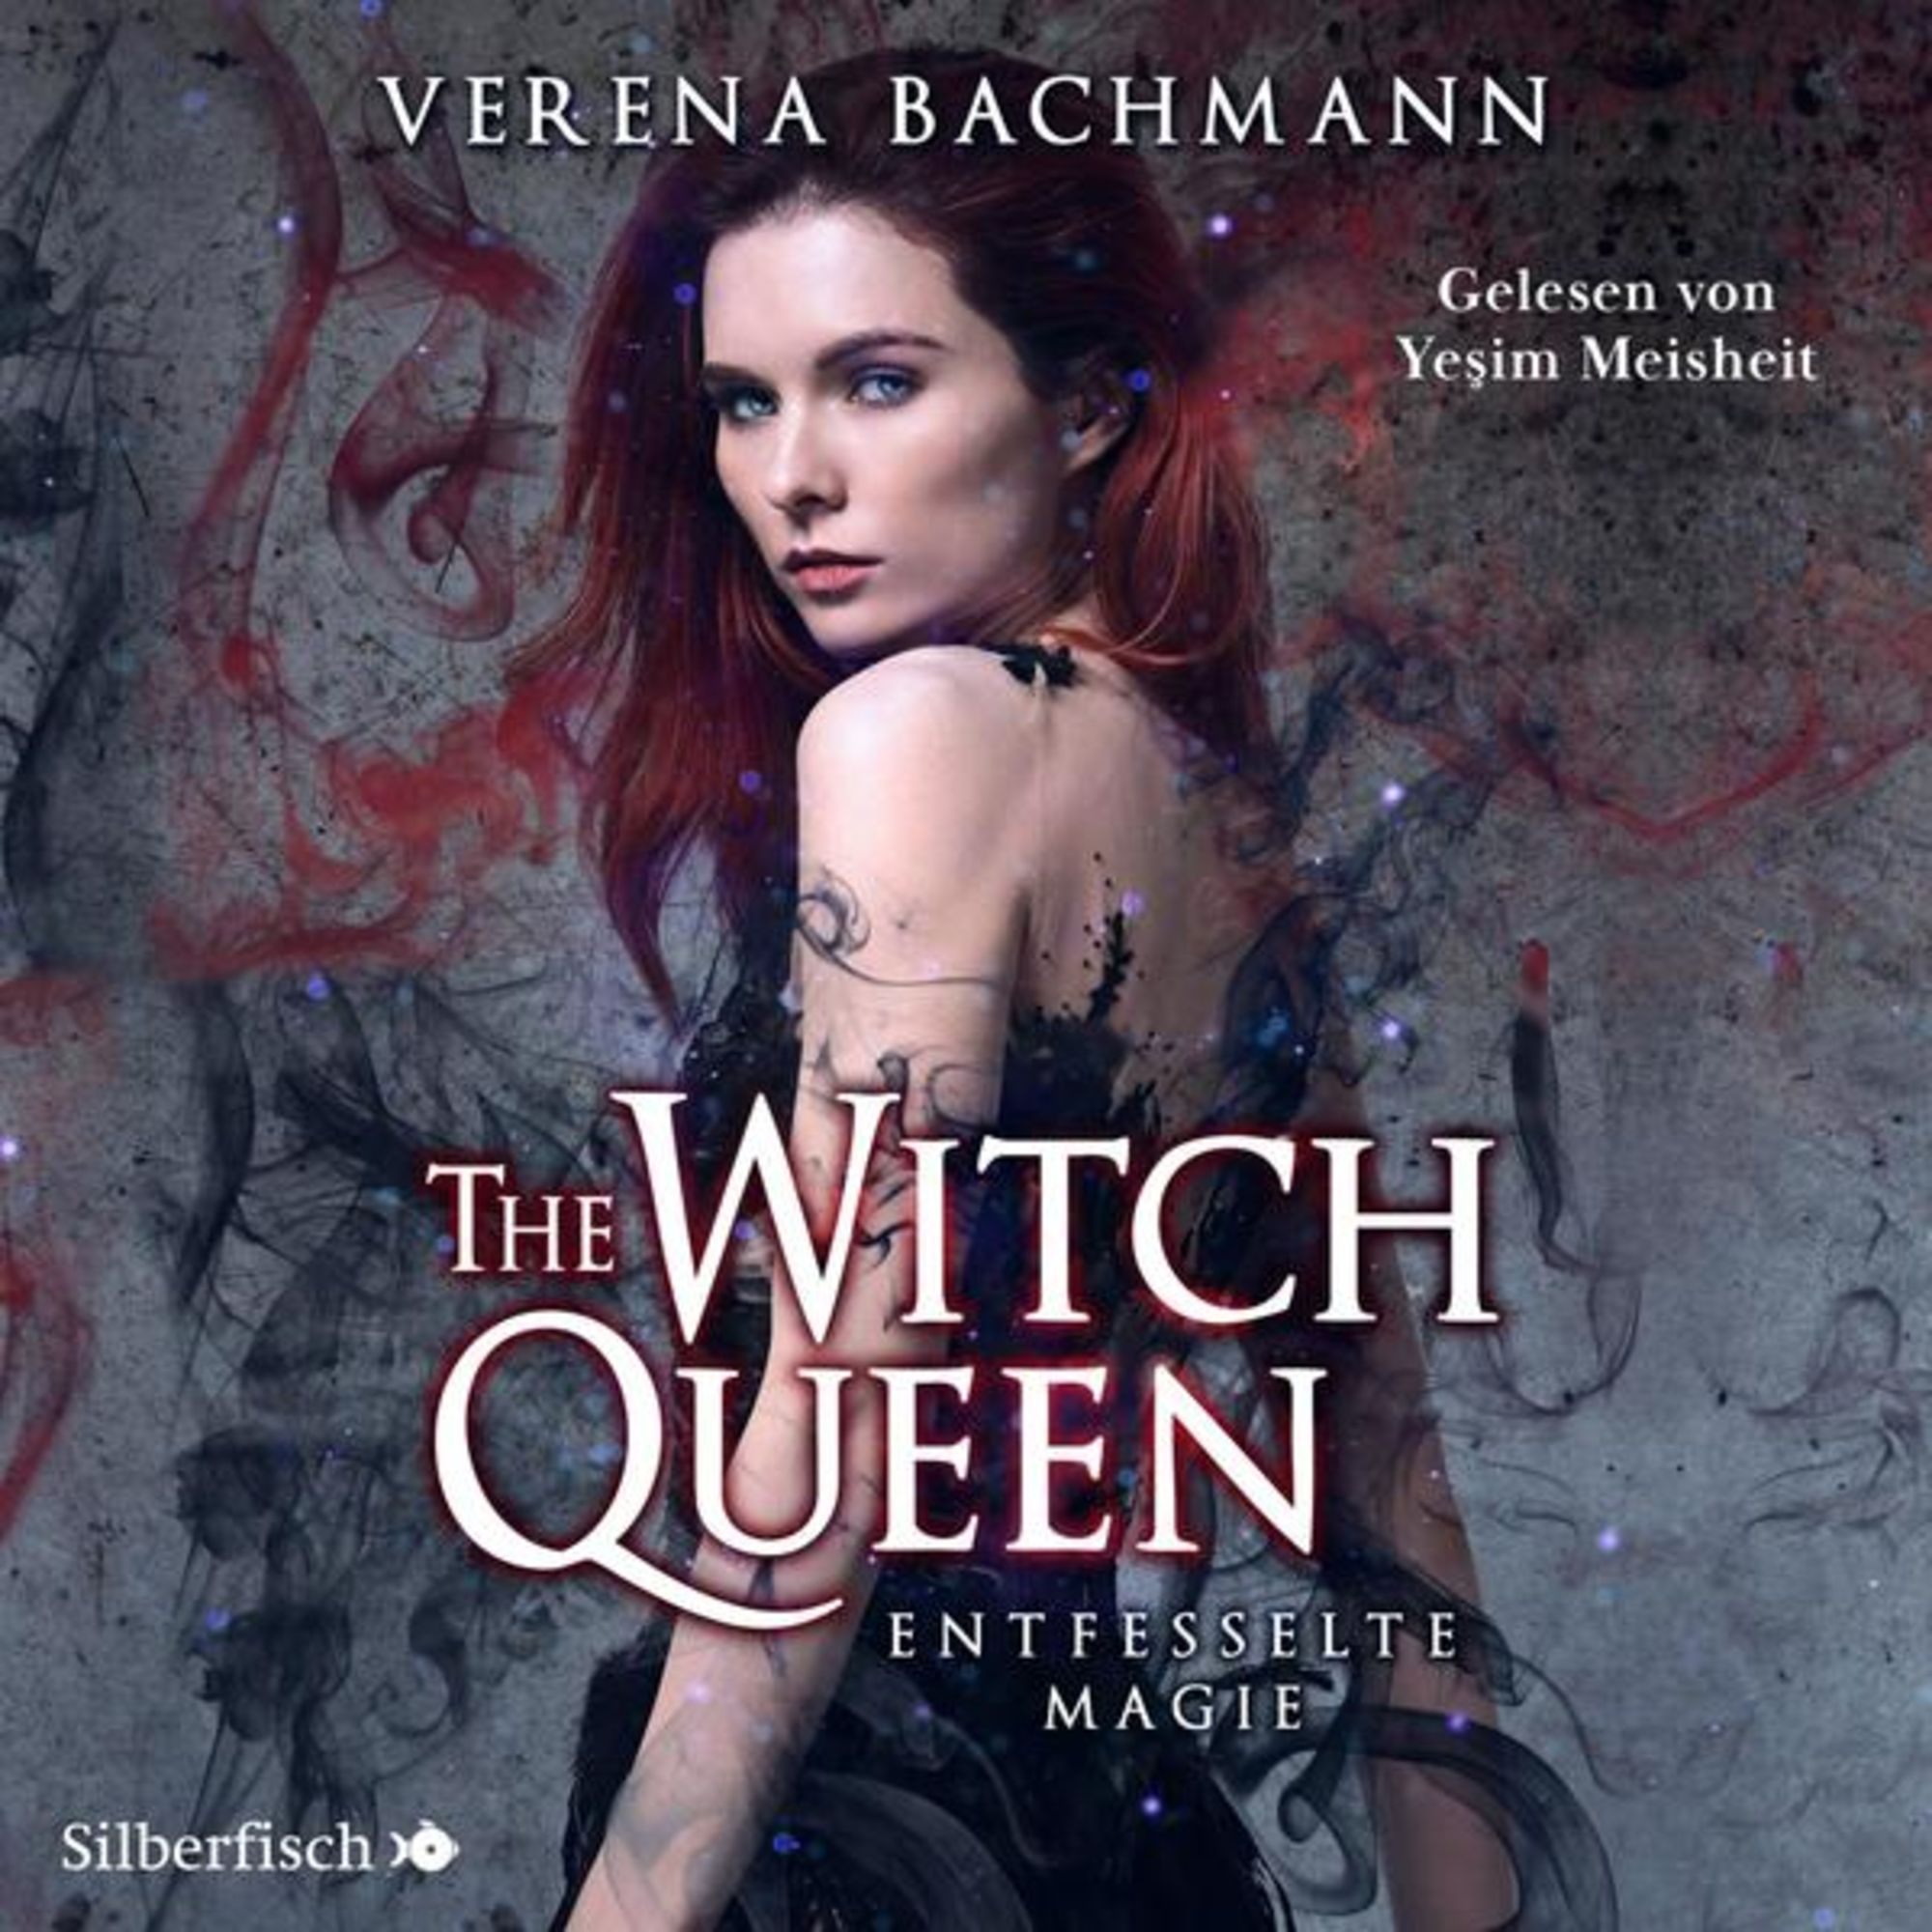 Witch \'Verena The Hörbuch-Download Entfesselte 1: The Witch Queen. - Queen Magie\' Bachmann\' von